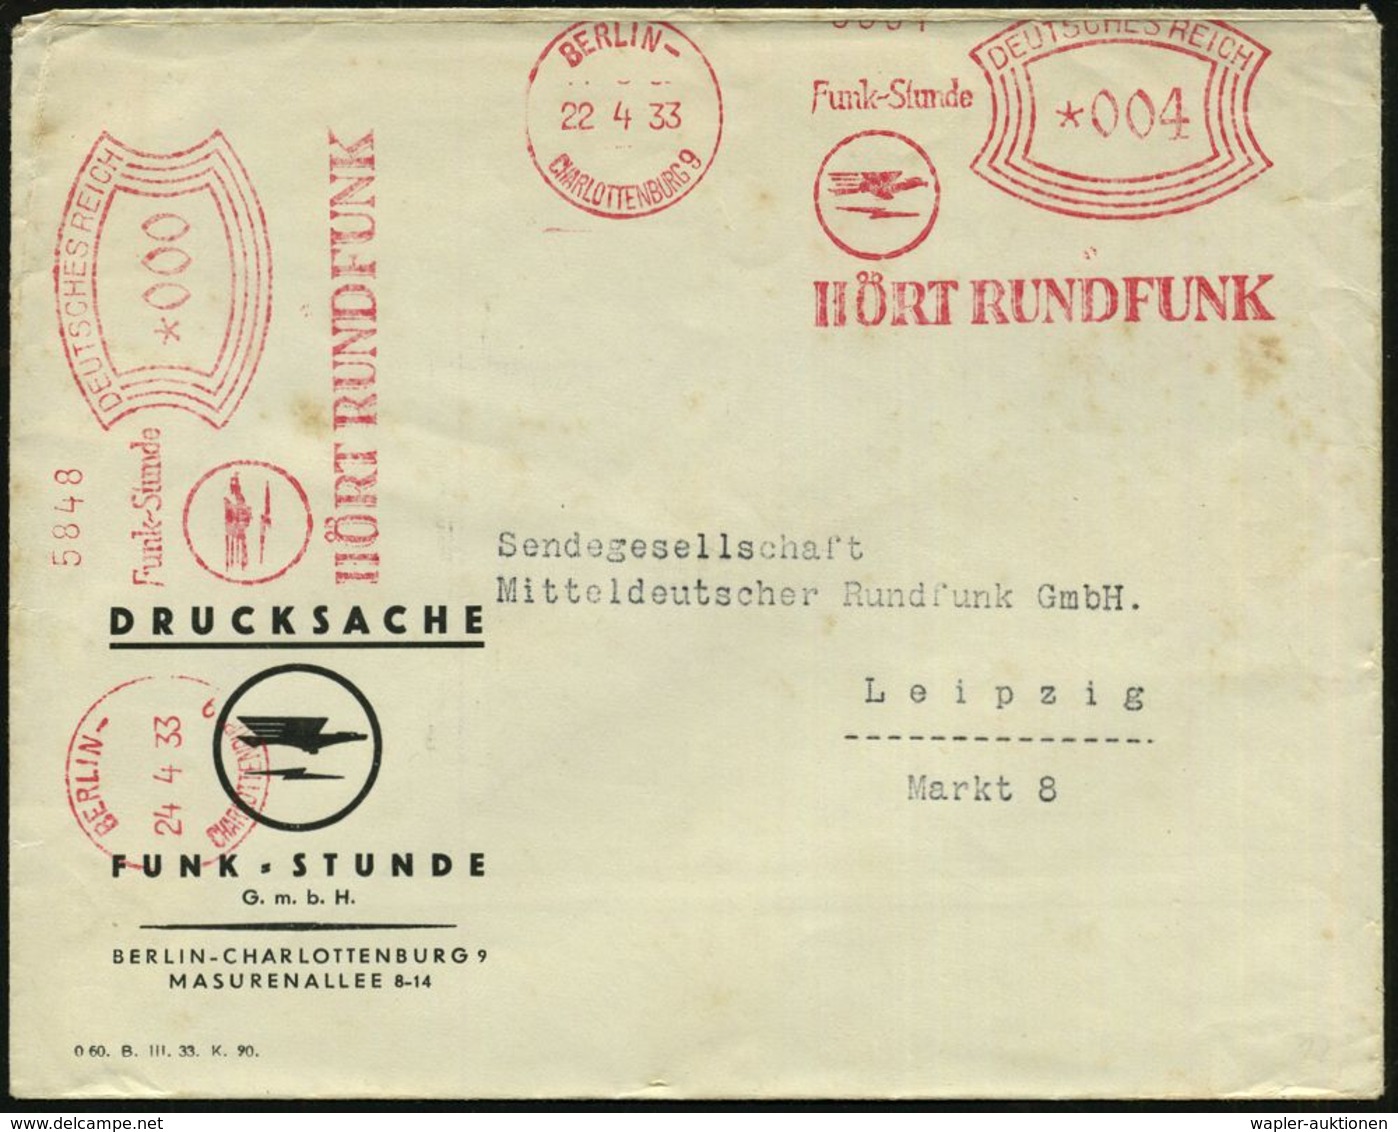 BERLIN-/ CHARLOTTENBURG9/ Funk-Stunde/ HÖRT RUNDFUNK 1933 (22.5.) AFS 004 Pf. + 000 = Sender-Logo, 2 Abdrucke (Adler, Bl - Non Classificati